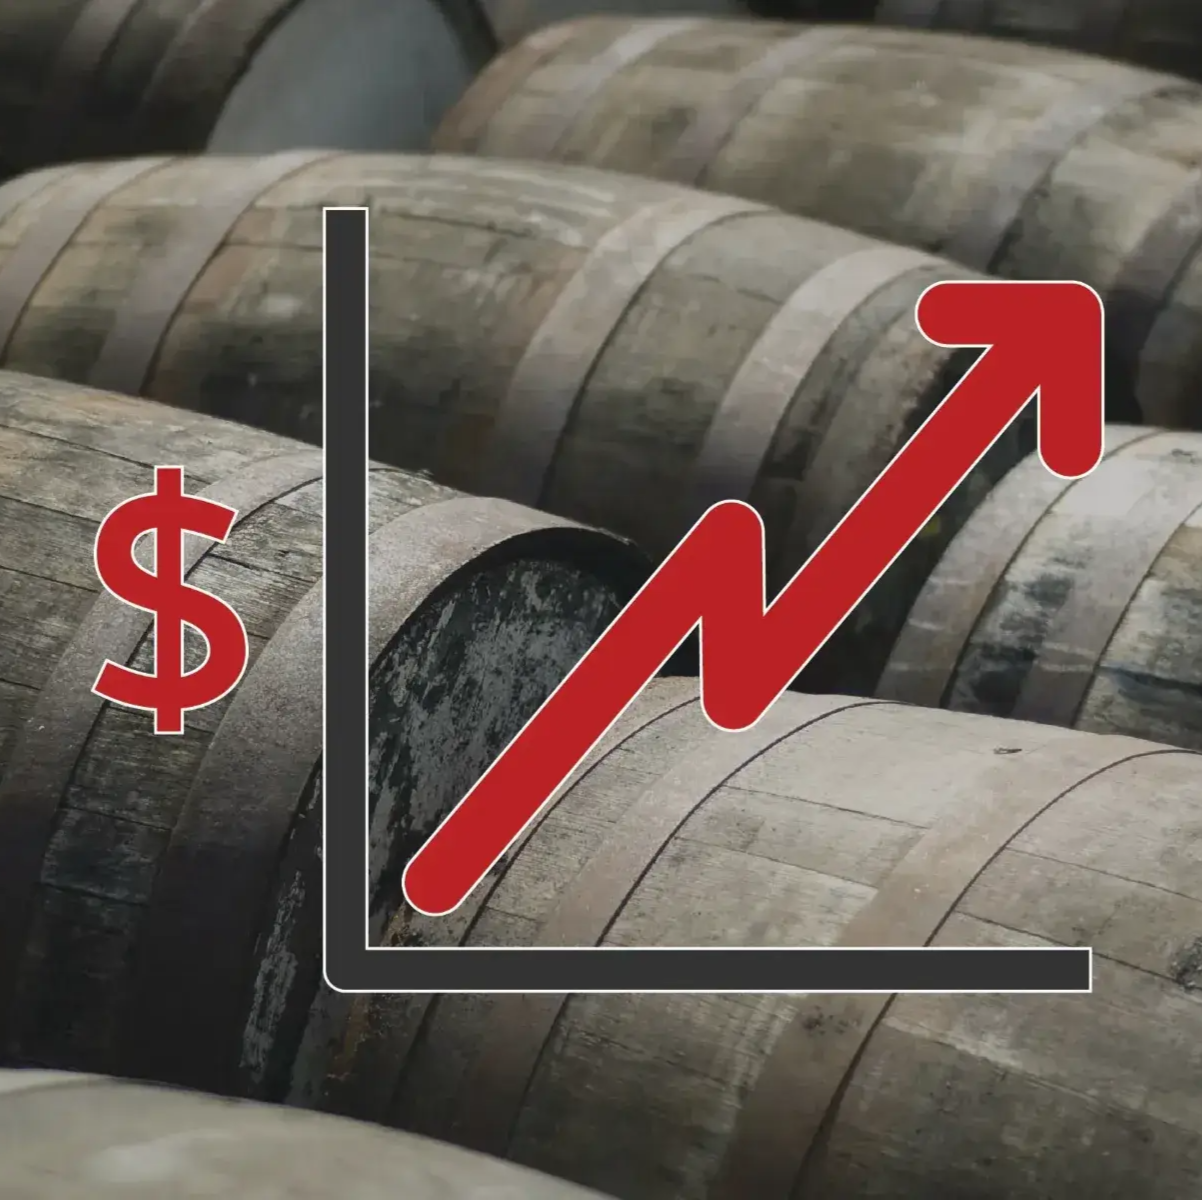 Let's talk barrel prices